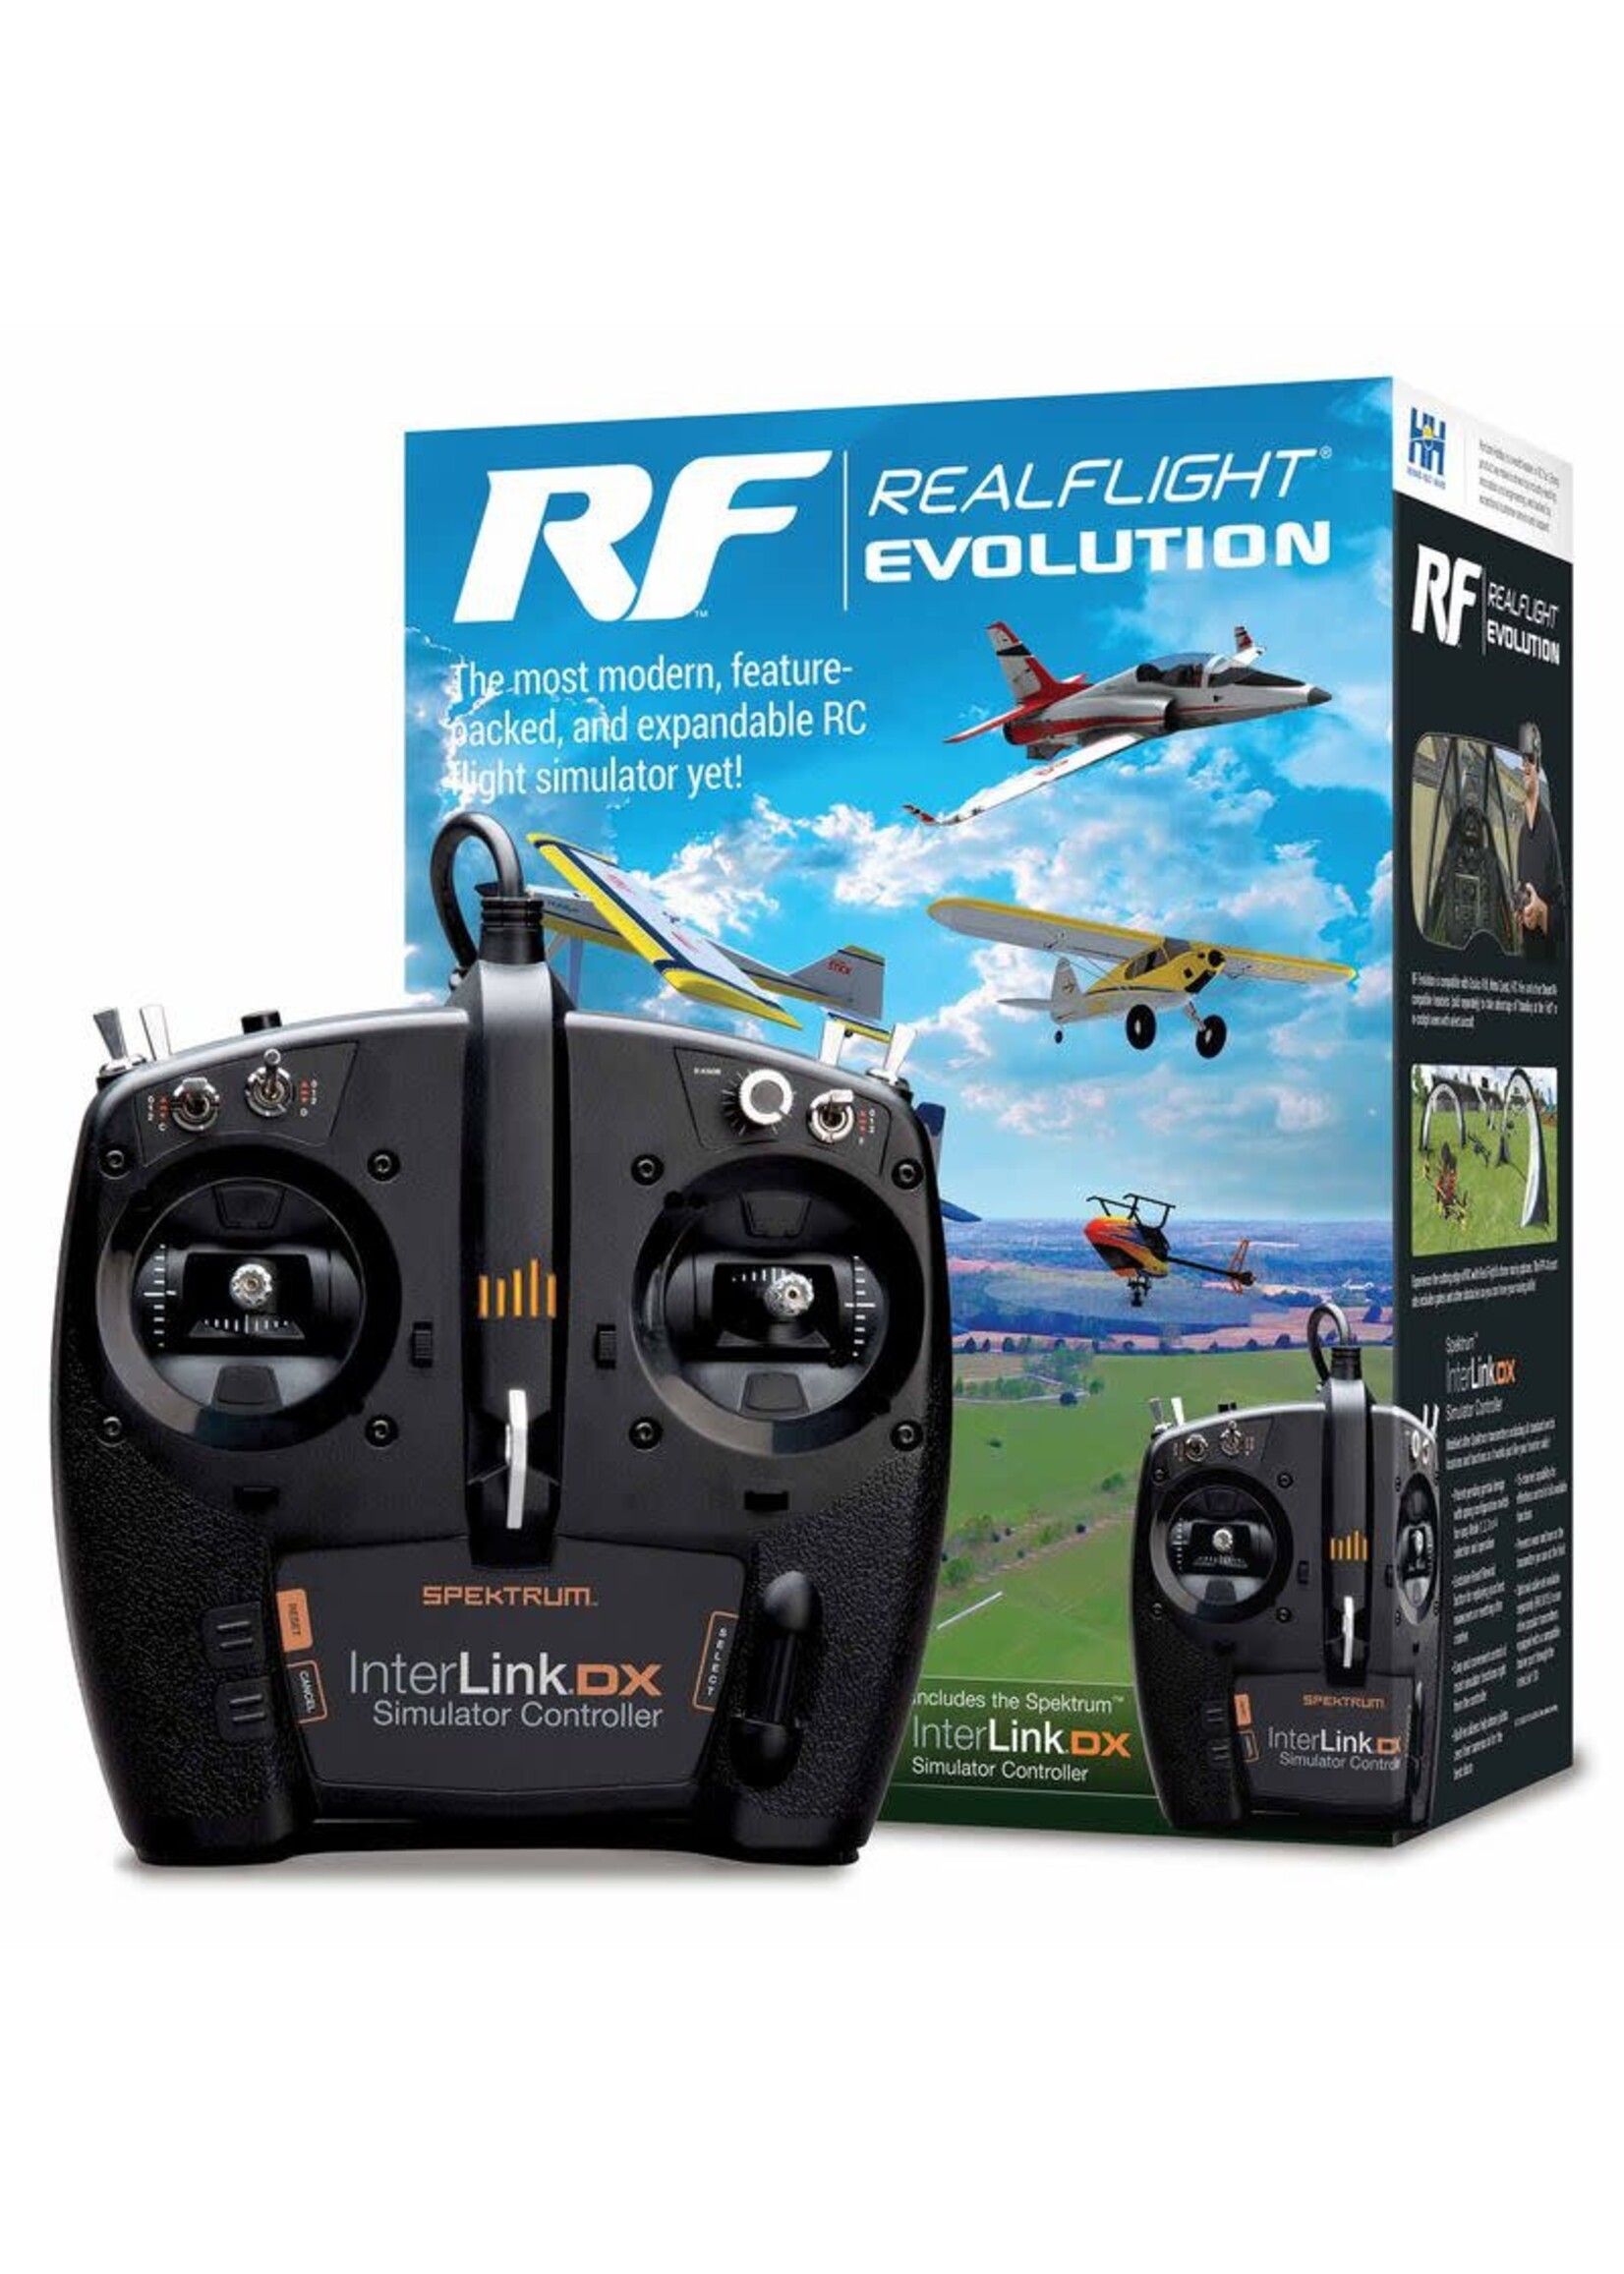 Real Flight Evolution RFL2000 RealFlight Evolution RC Flight Simulator with InterLink DX Controller